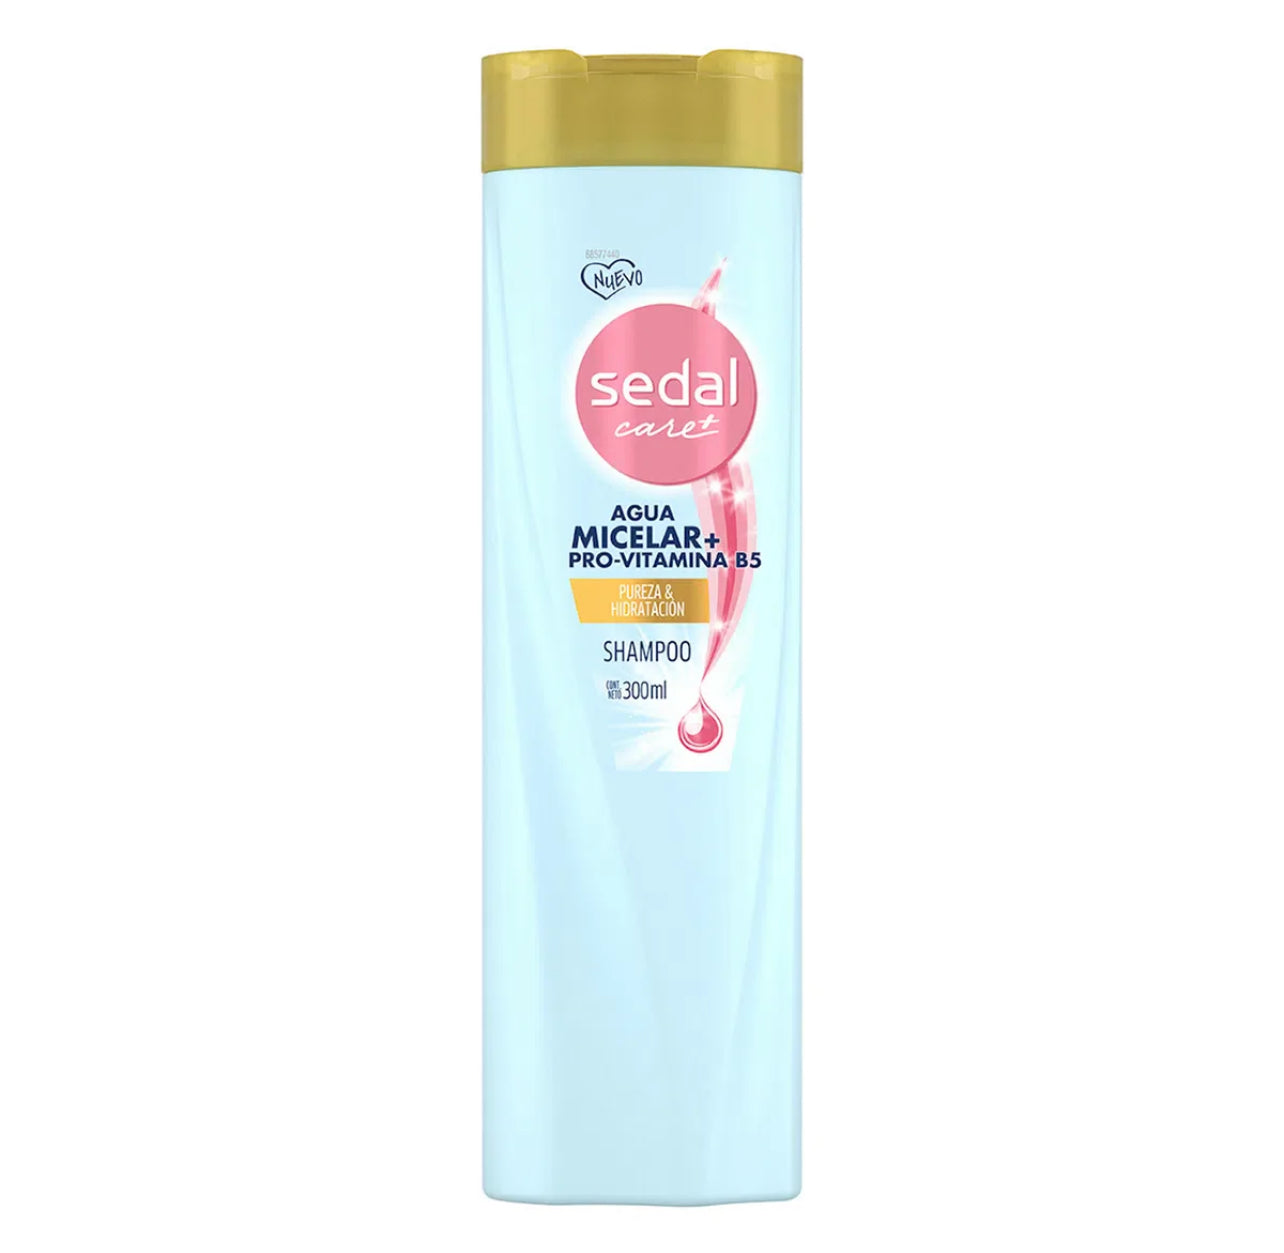 Sedal Care + Shampoo